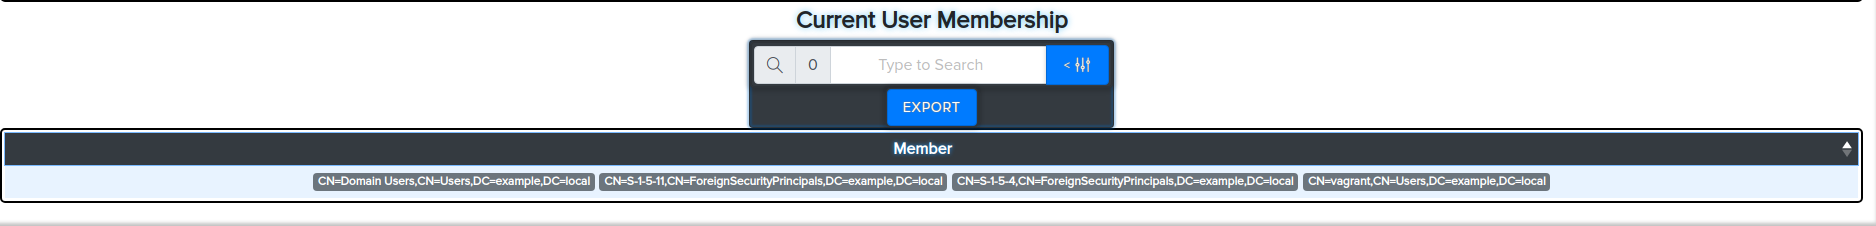 bloodyad_current_user_membership.png